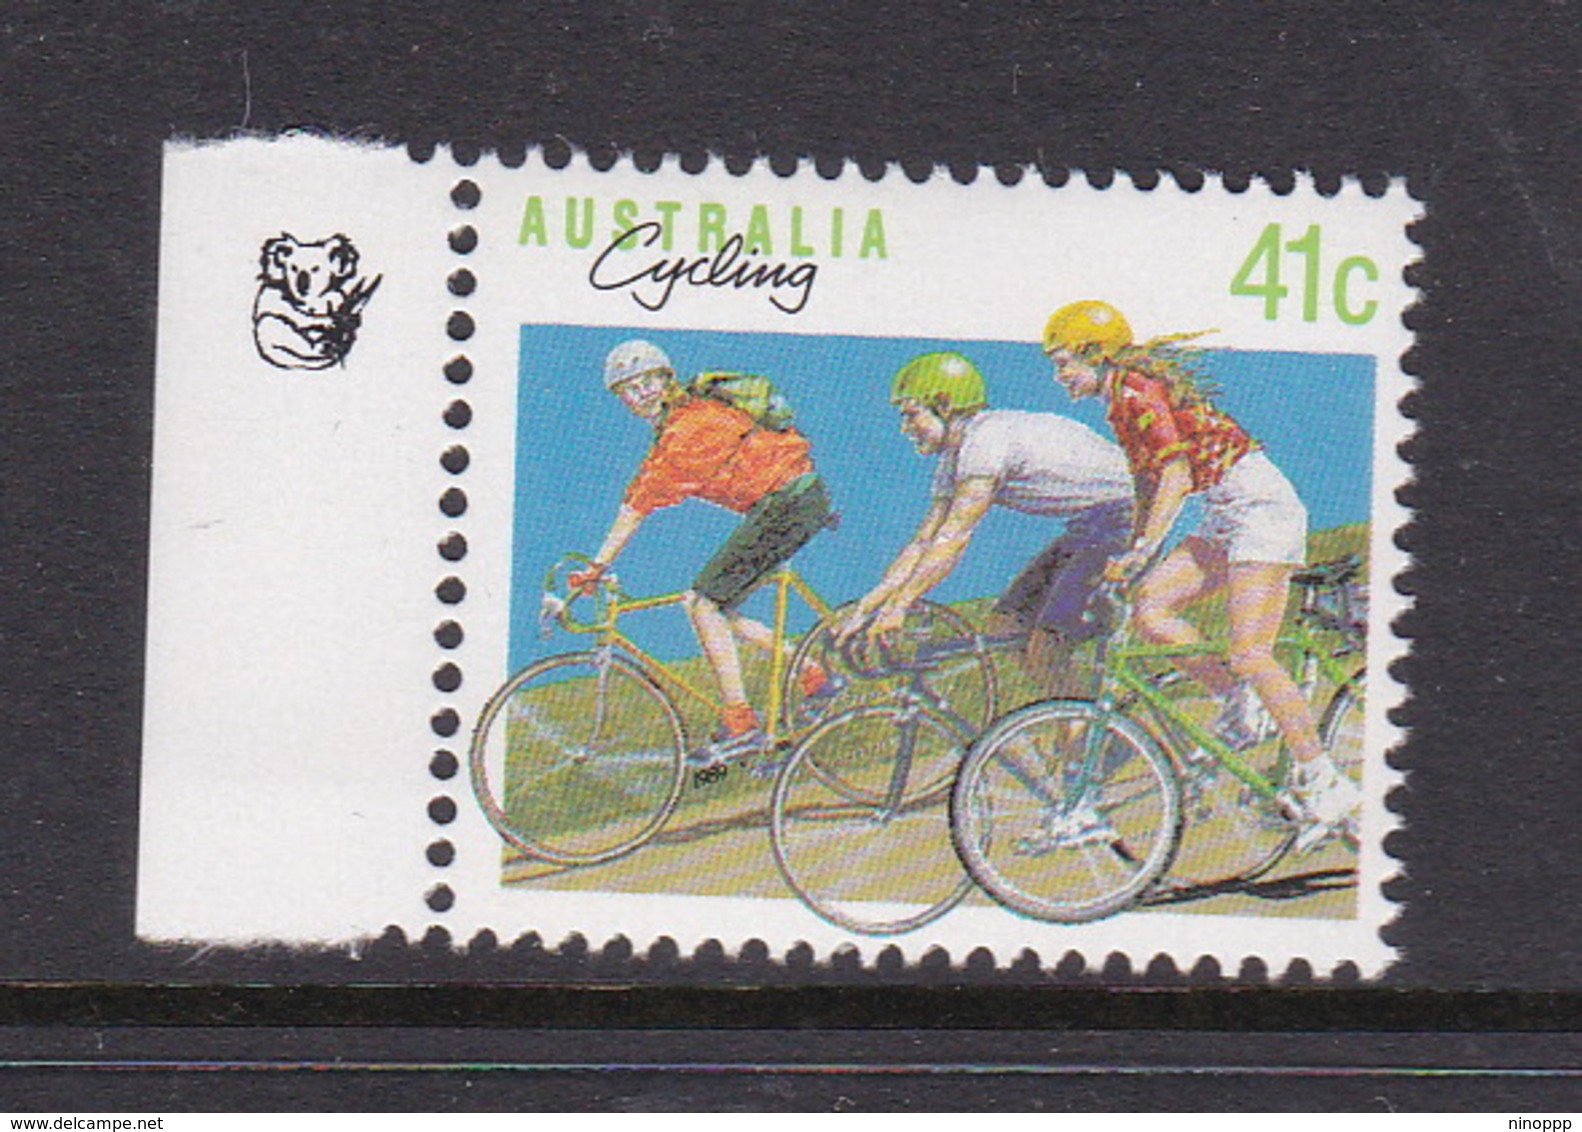 Australia ASC 1208b 1989 41c Cycling 1 Koala Reprint ,mint Never Hinged - Proofs & Reprints